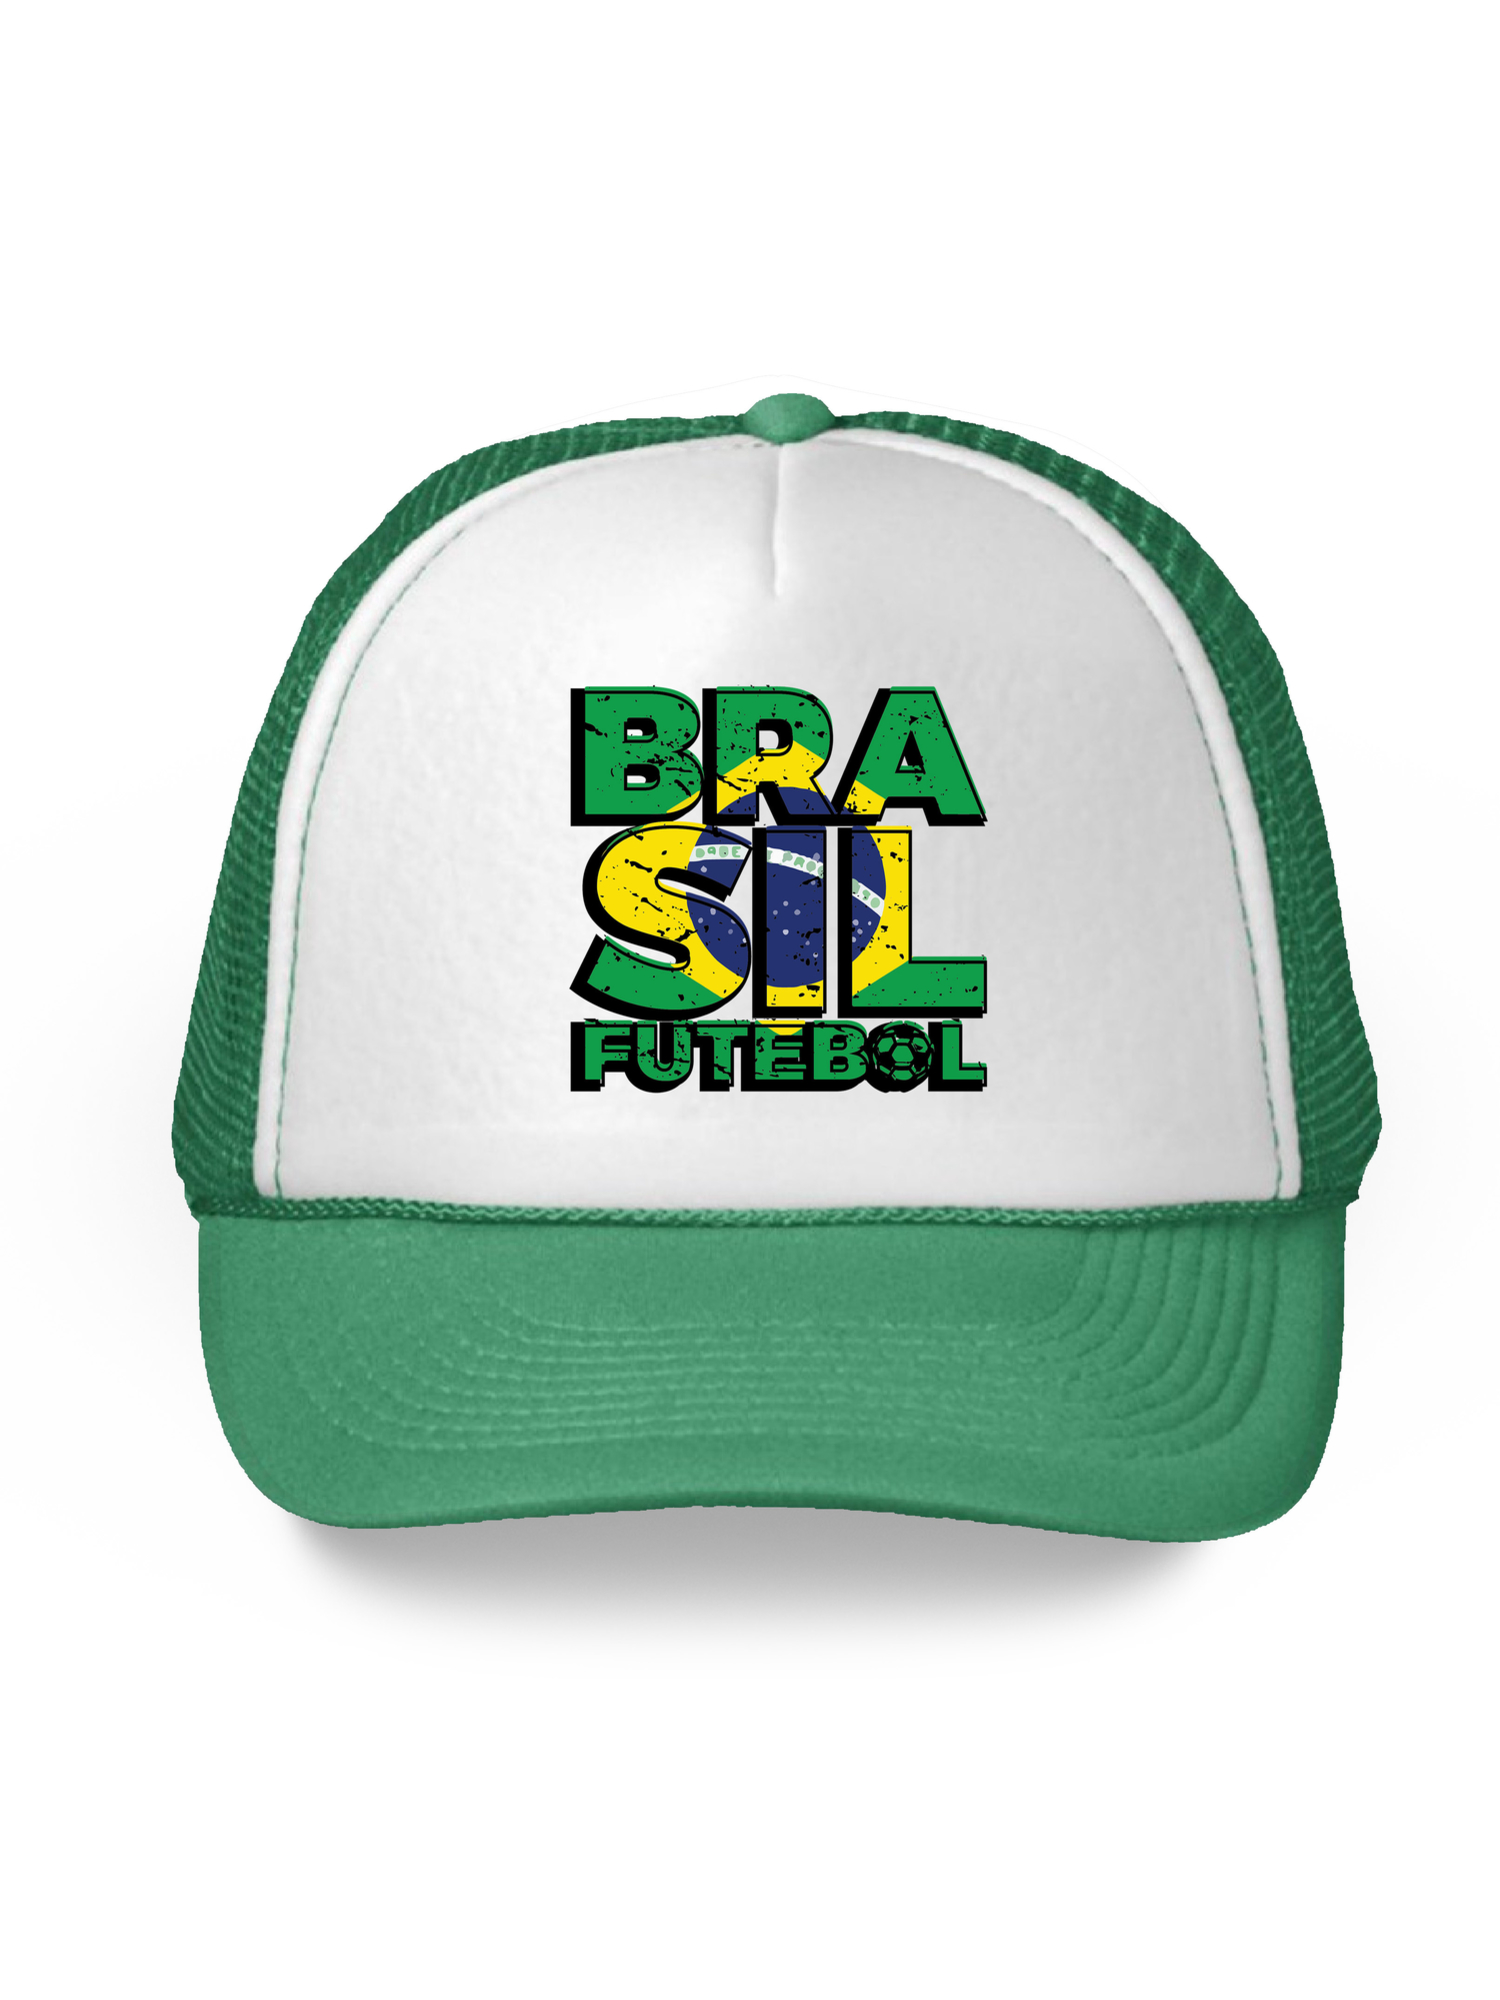 Awkward Styles Brasil Futebol Hat Brazil Trucker Hats for Men and Women Hat Gifts from Brazil Brazilian Soccer Cap Brazilian Hats Unisex Brazil Snapback Hat Brazil 2018 Trucker Hats Brazil Soccer Hat - image 1 of 6